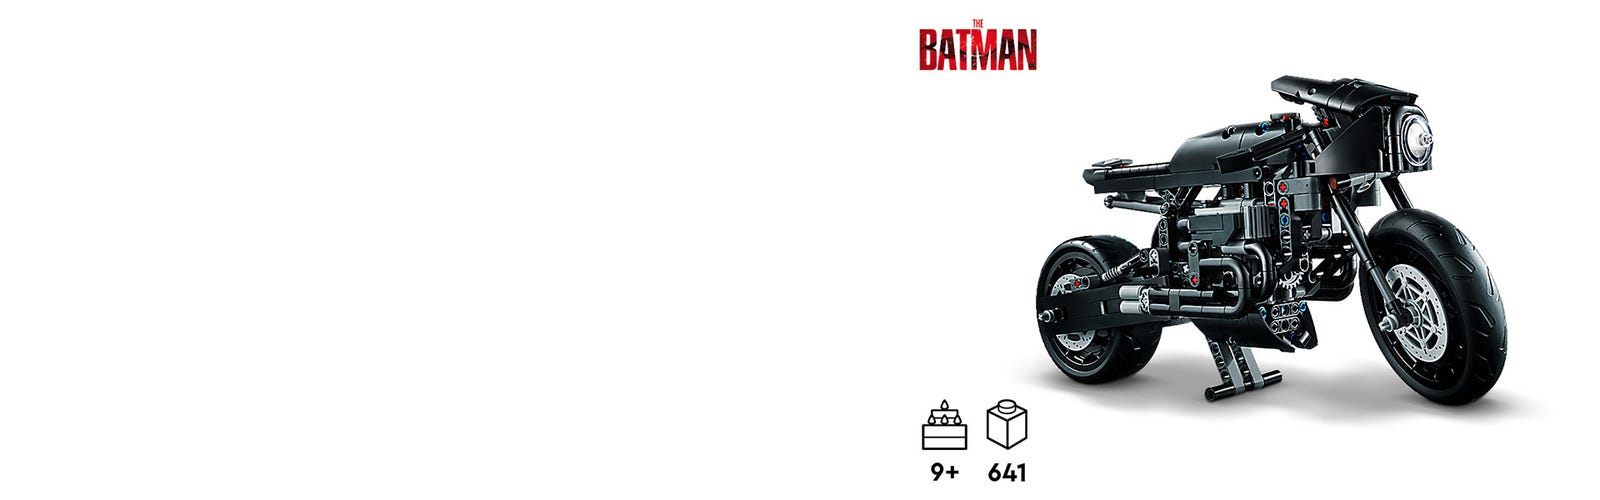 THE BATMAN – BATCYCLE™ 42155, DC